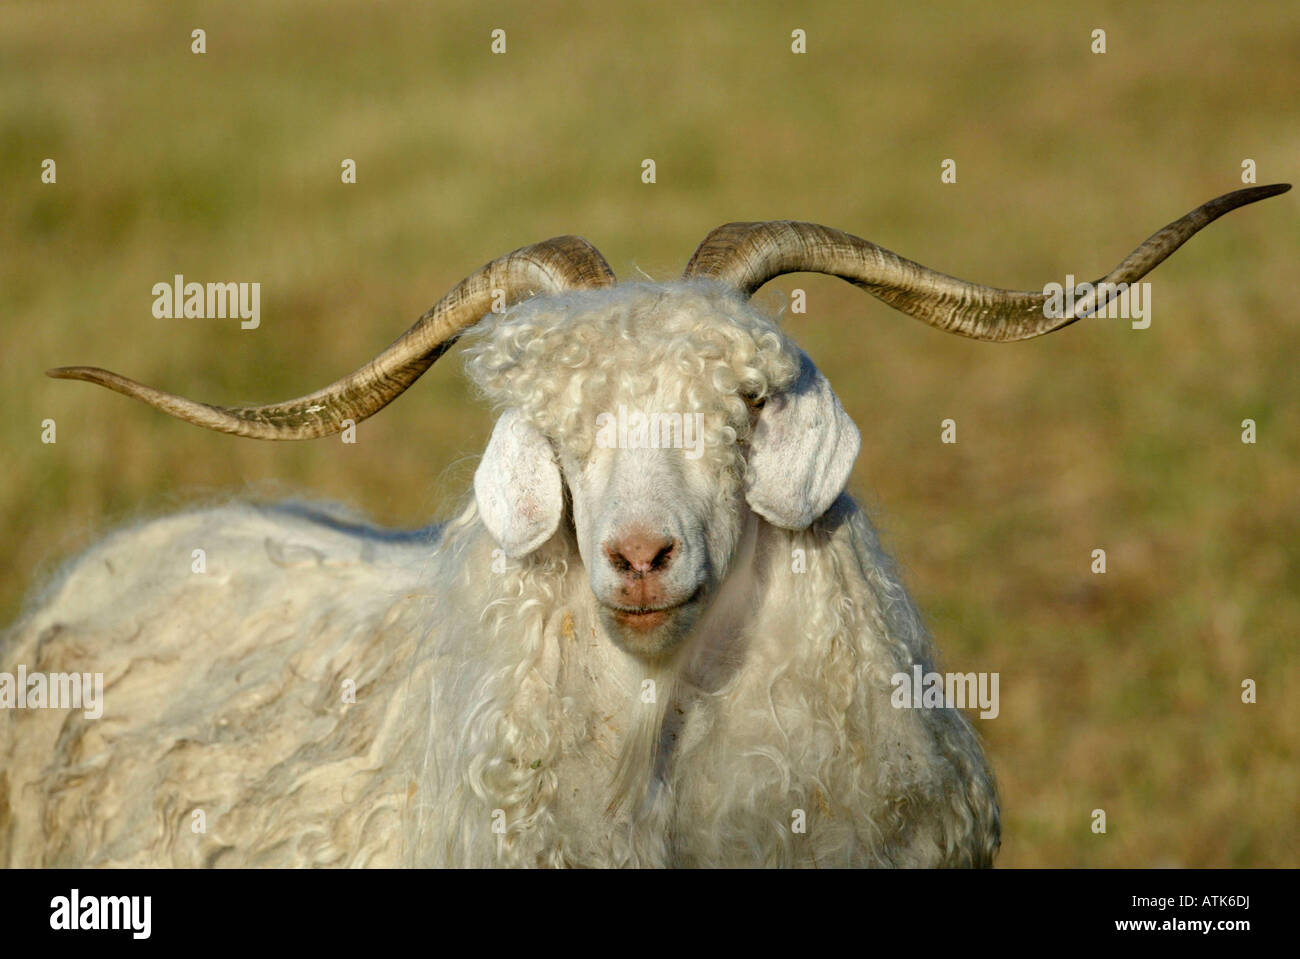 Domestic Goat / Mohair Goat / Hausziege / Angora-Ziege Stock Photo